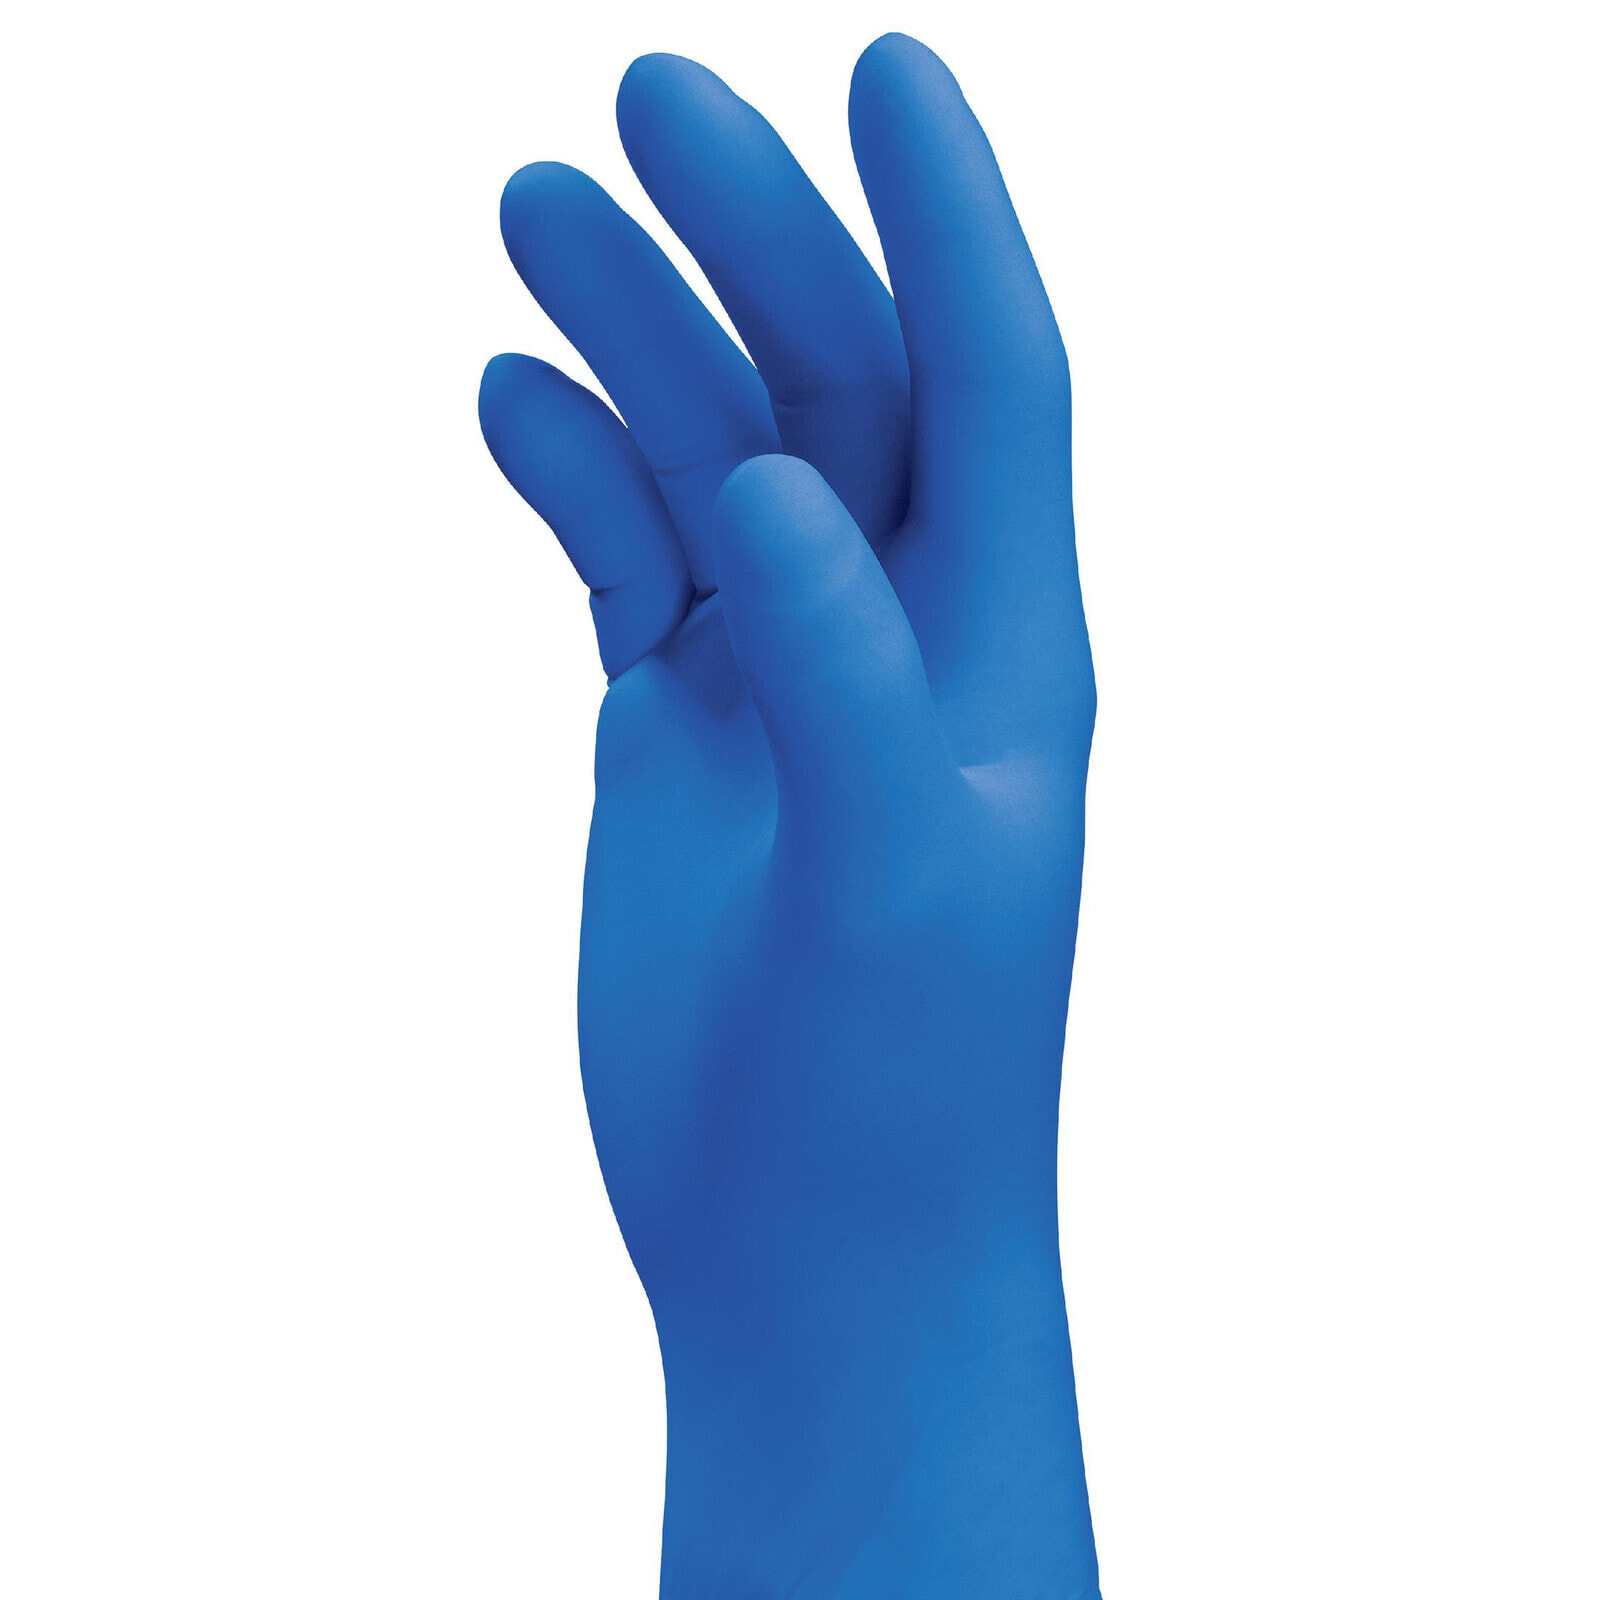 UVEX Arbeitsschutz u-fit lite - Workshop gloves - Blue - L - Adult - Adult - Unisex